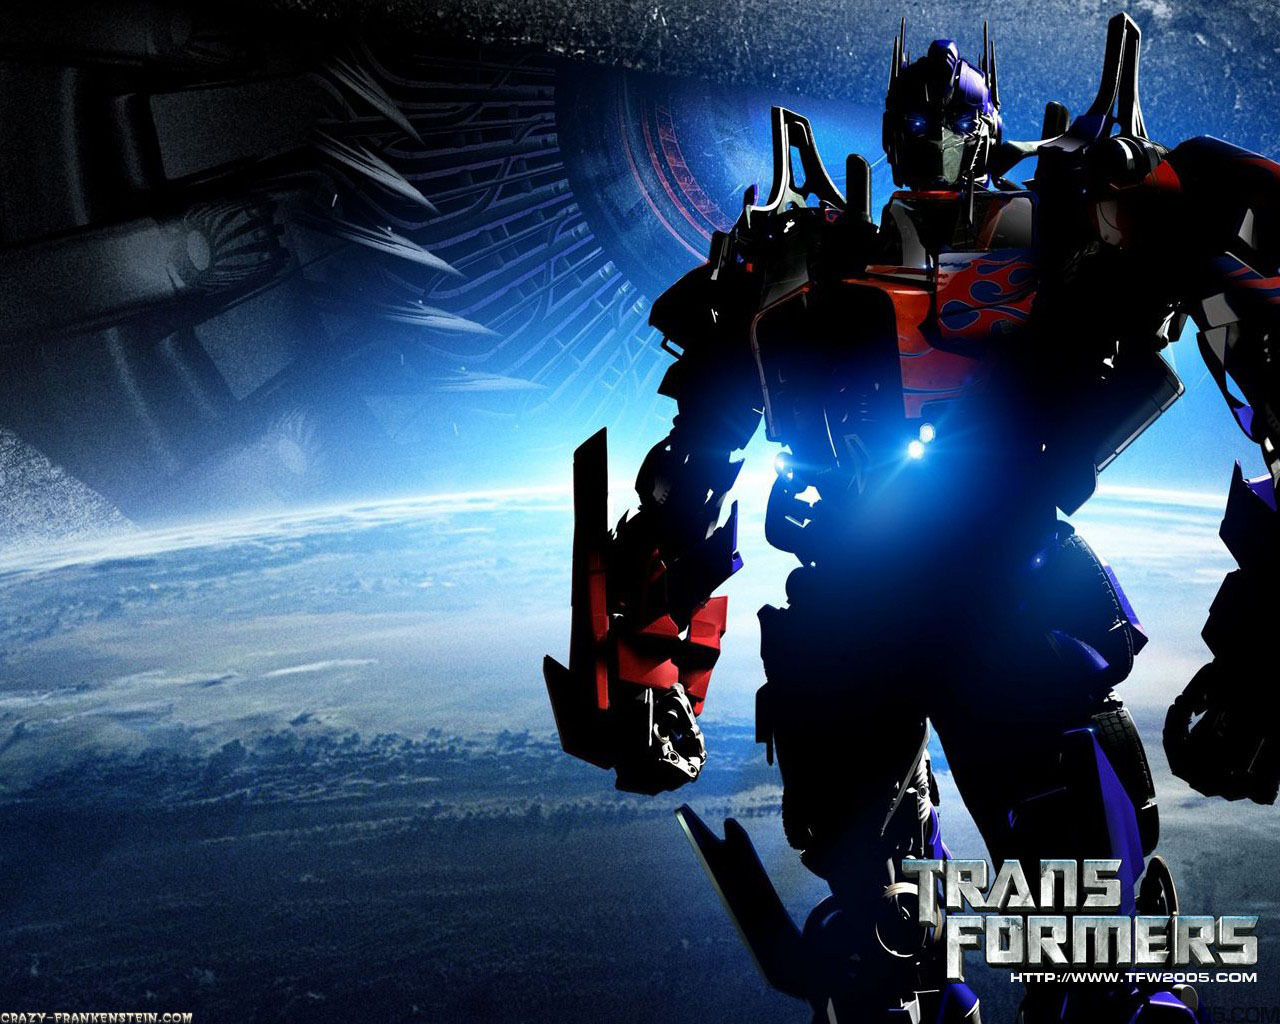 Optimus Prime of the Transformers